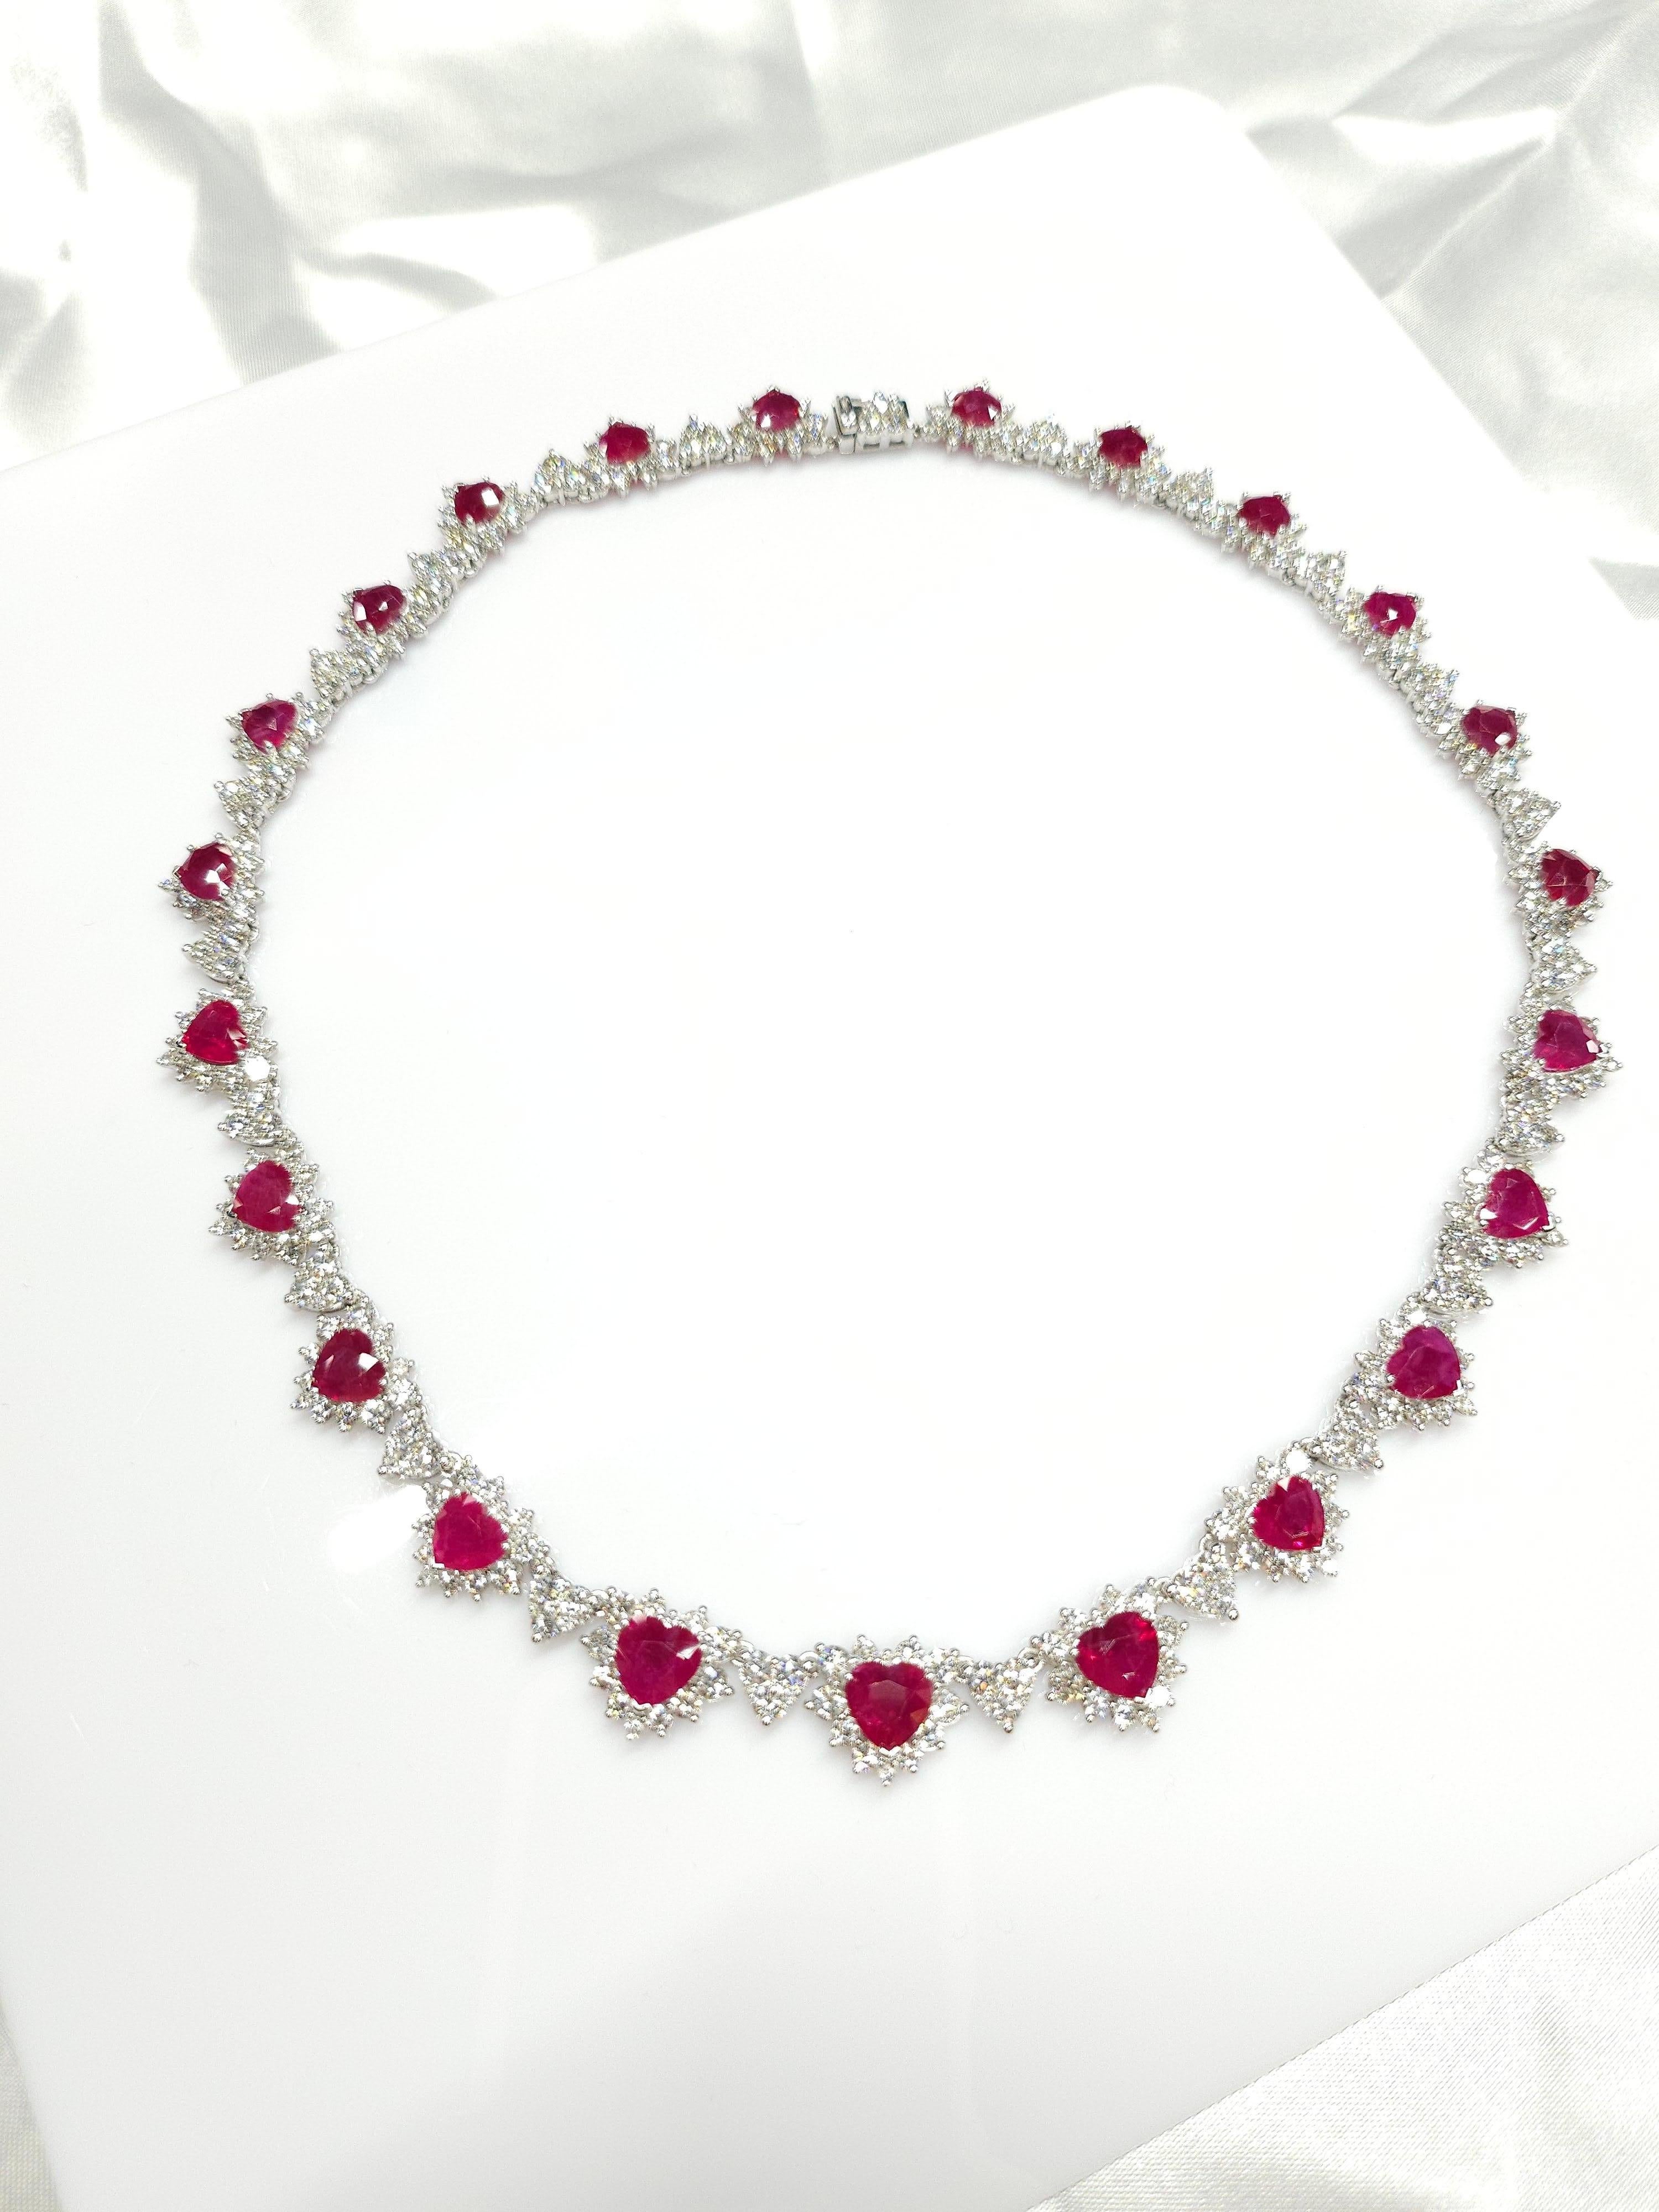 IGI Certified 26.58 Carat Burma Ruby & 18.85 Carat Diamond Necklace in 18K Gold For Sale 9